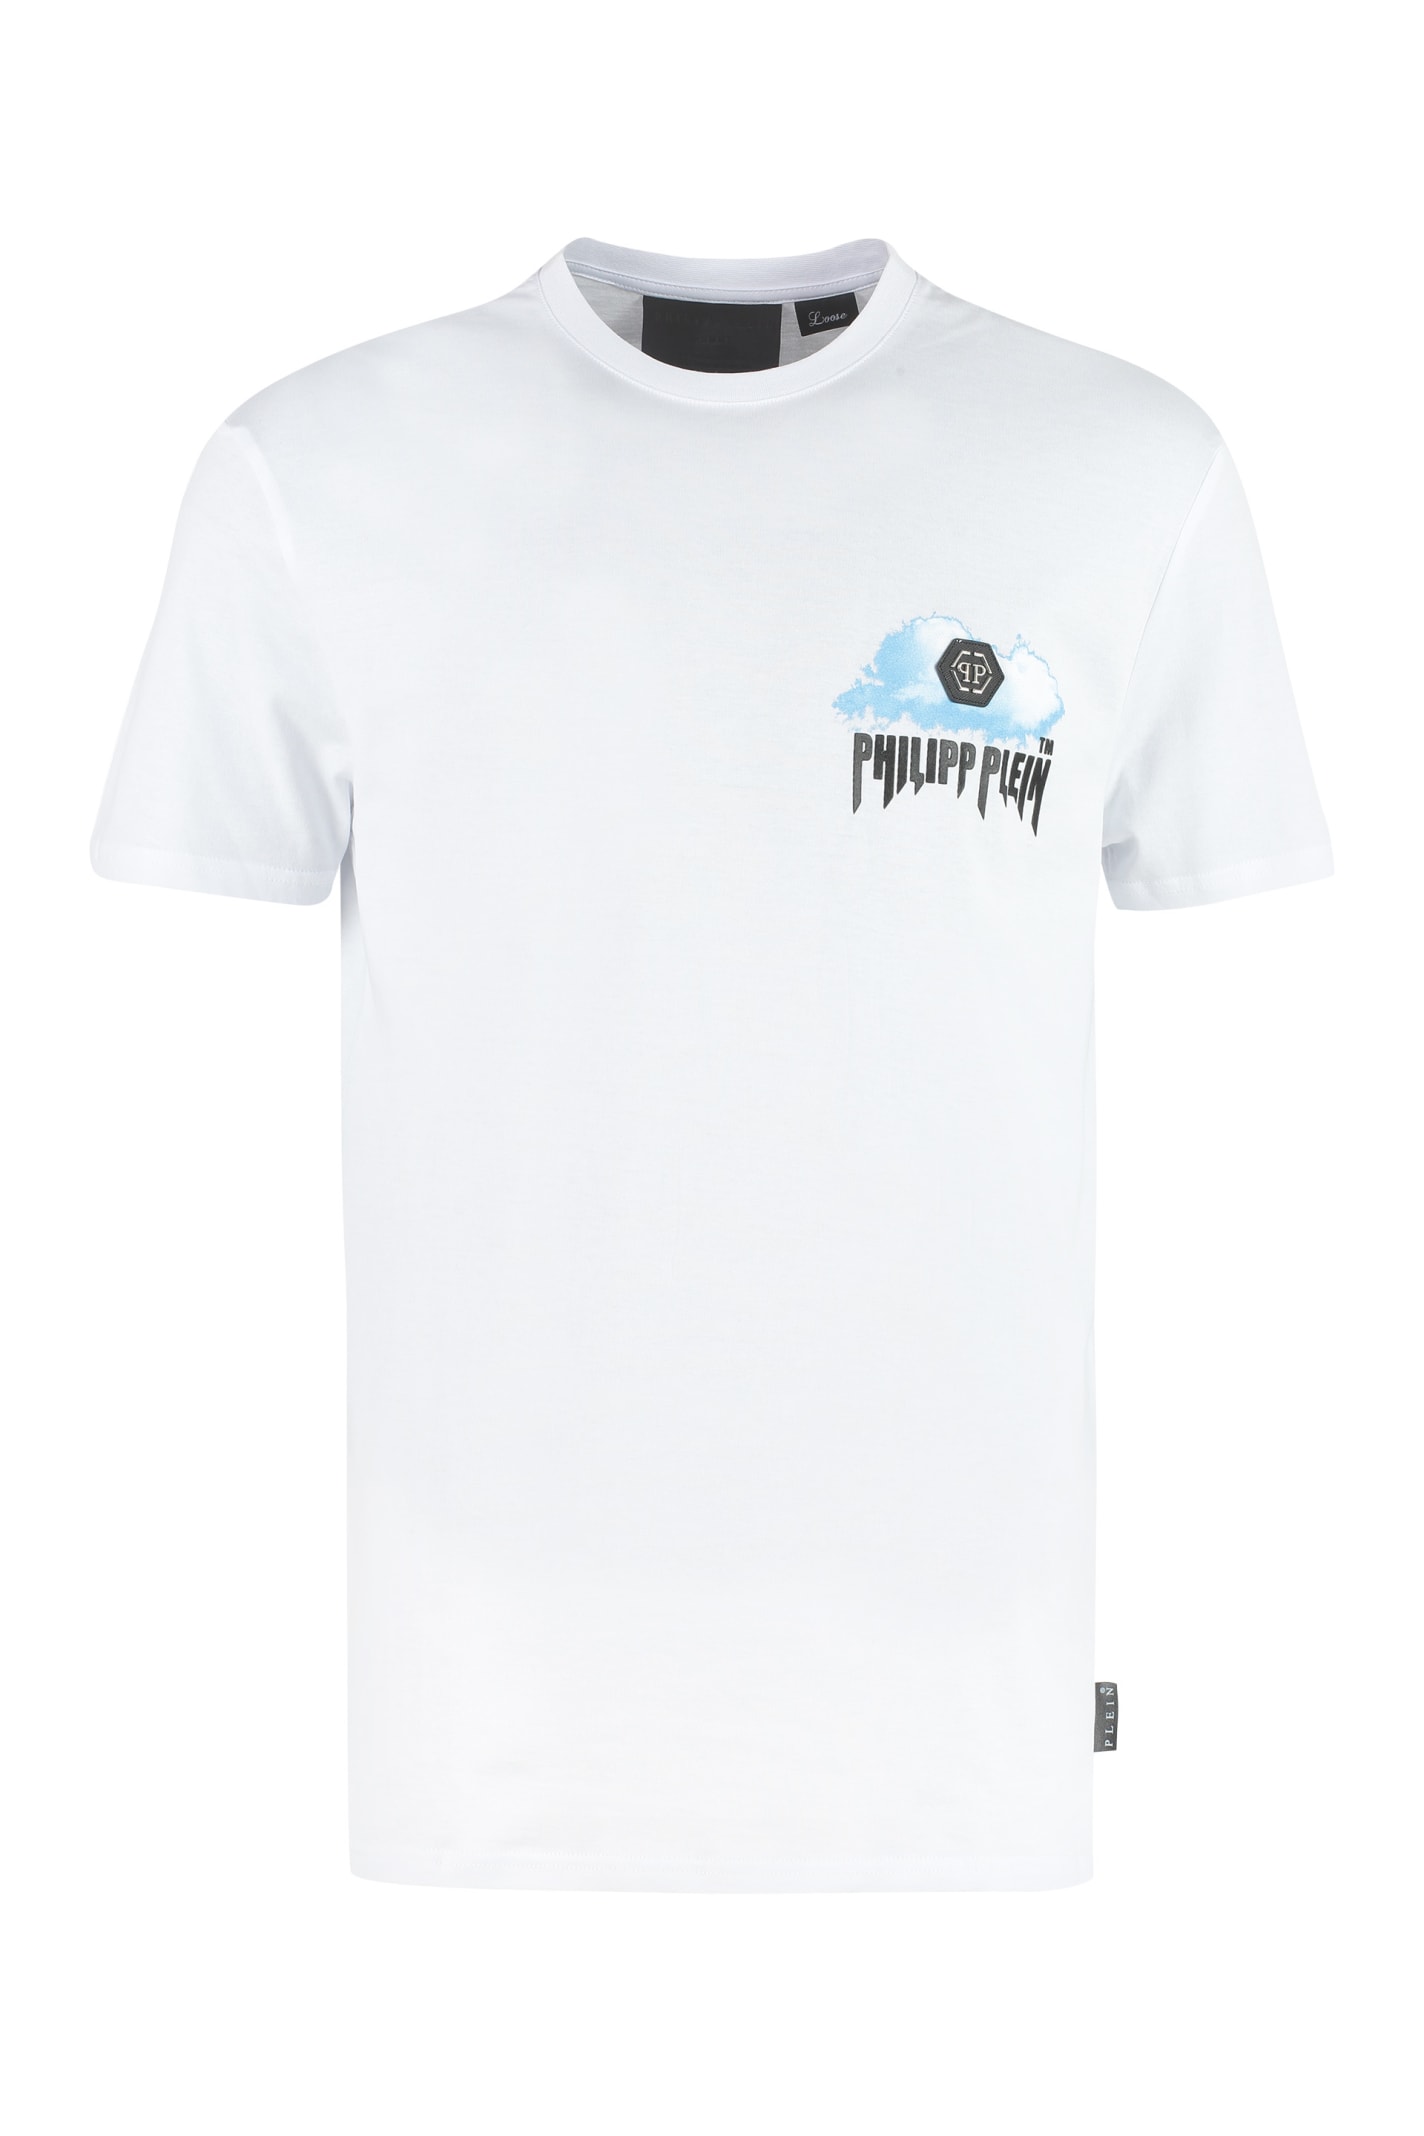 Philipp Plein Cotton Crew-neck T-shirt In White